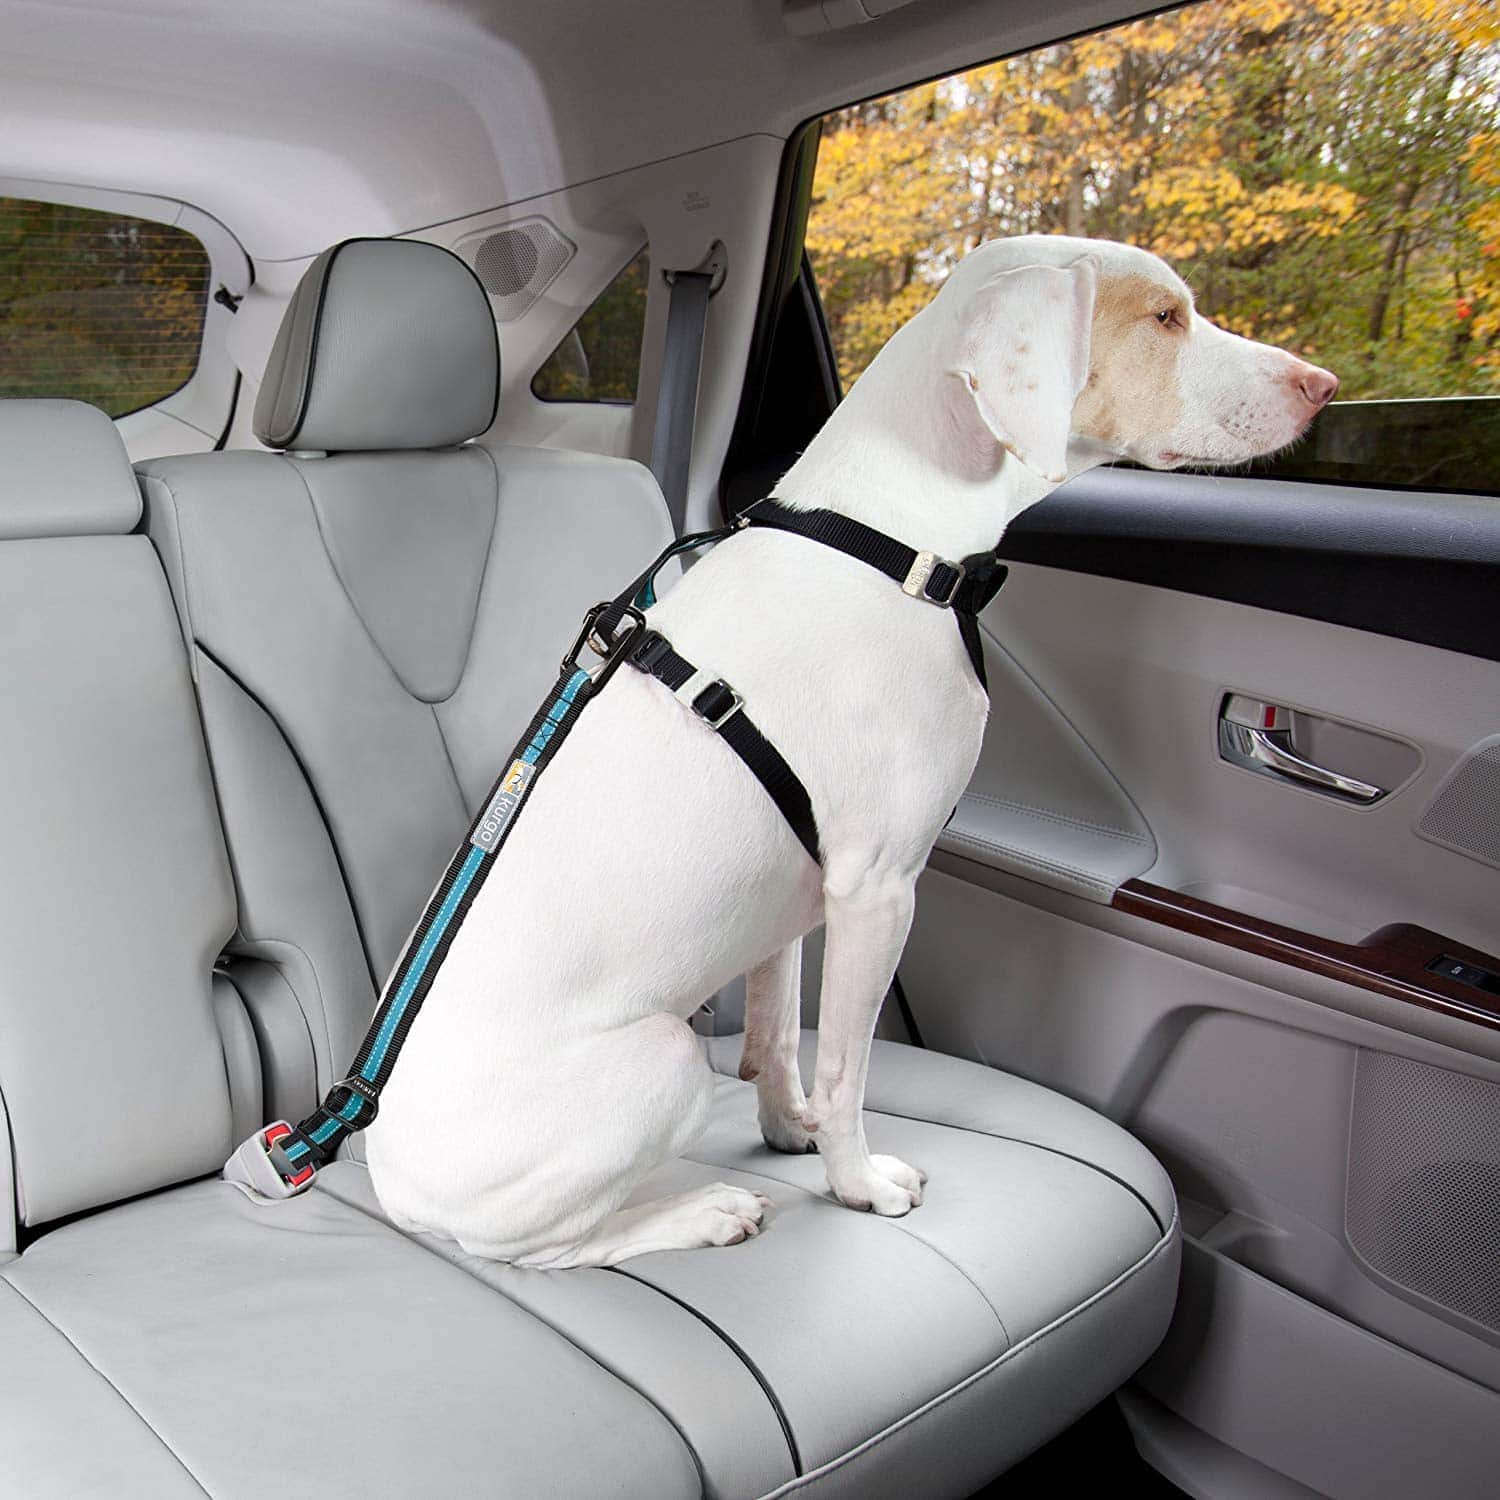 Orange Dog Car Seatbelt Adjustable Pet Seat Belt Strap Car Headrest Restraint Adjustable Nylon Dog Restraints Vehicle Seatbelts Harness Dog Seat Belt Pet Universal Seatbelts Leash